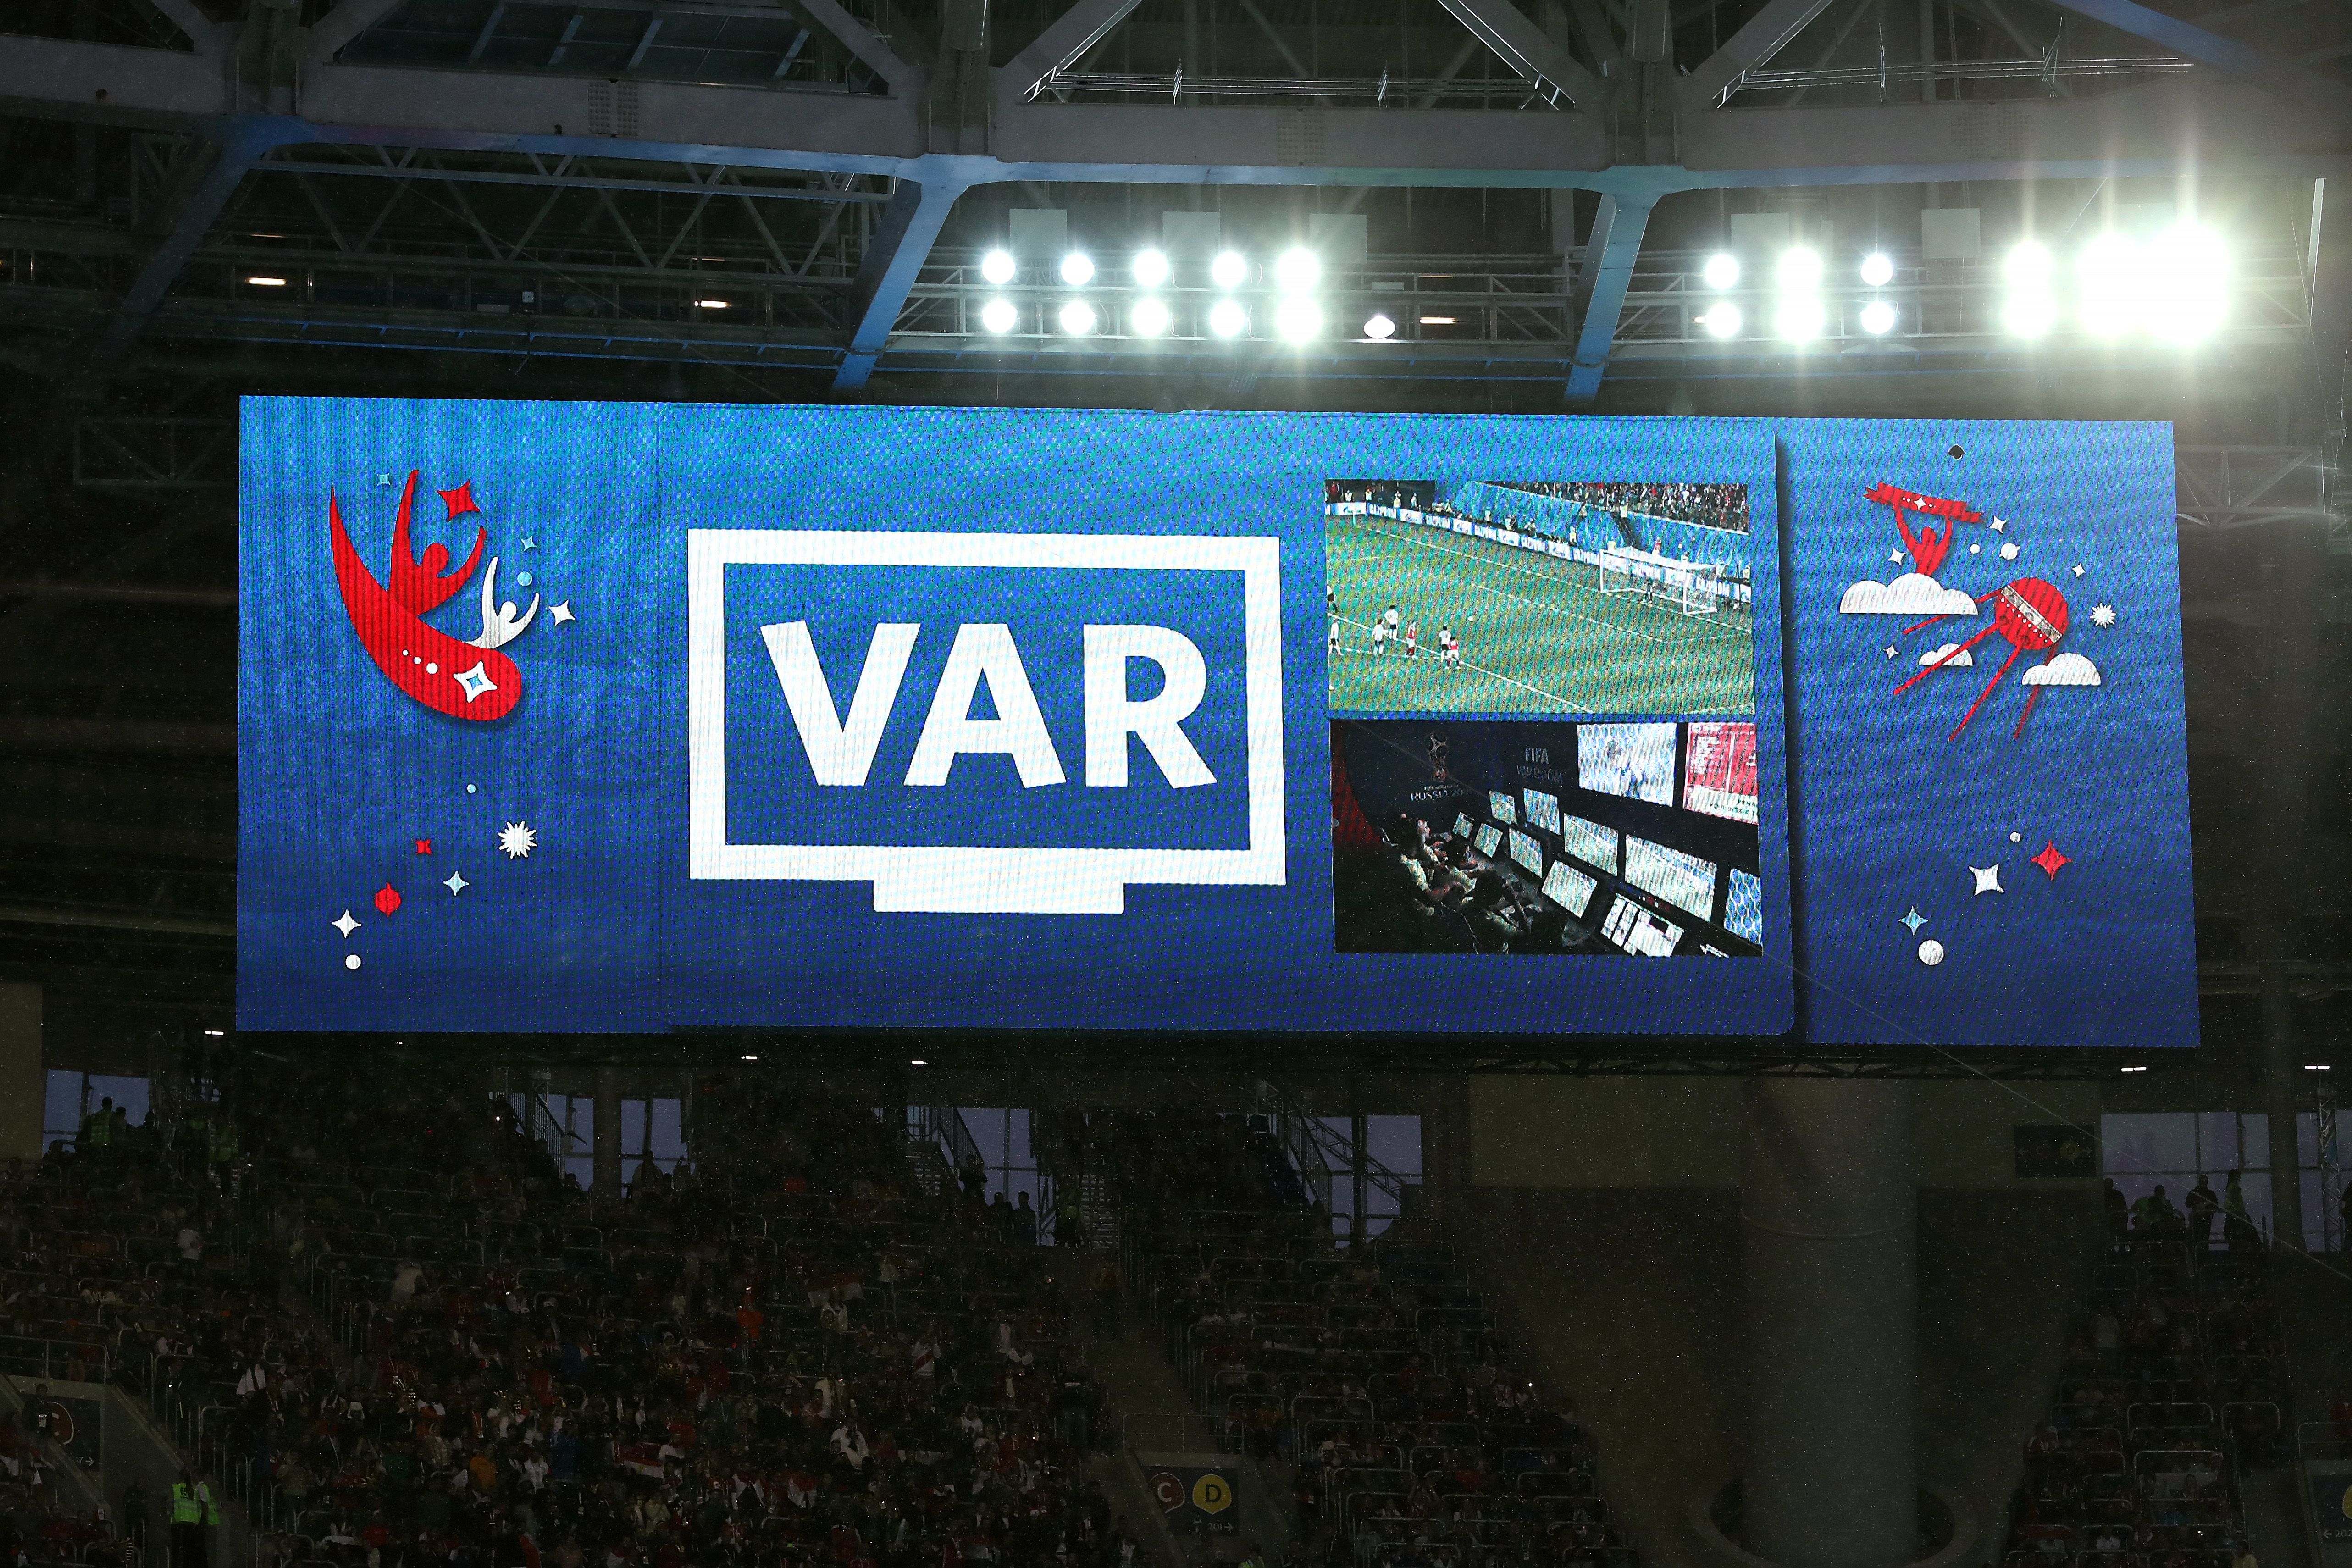 The big screen displays a VAR review